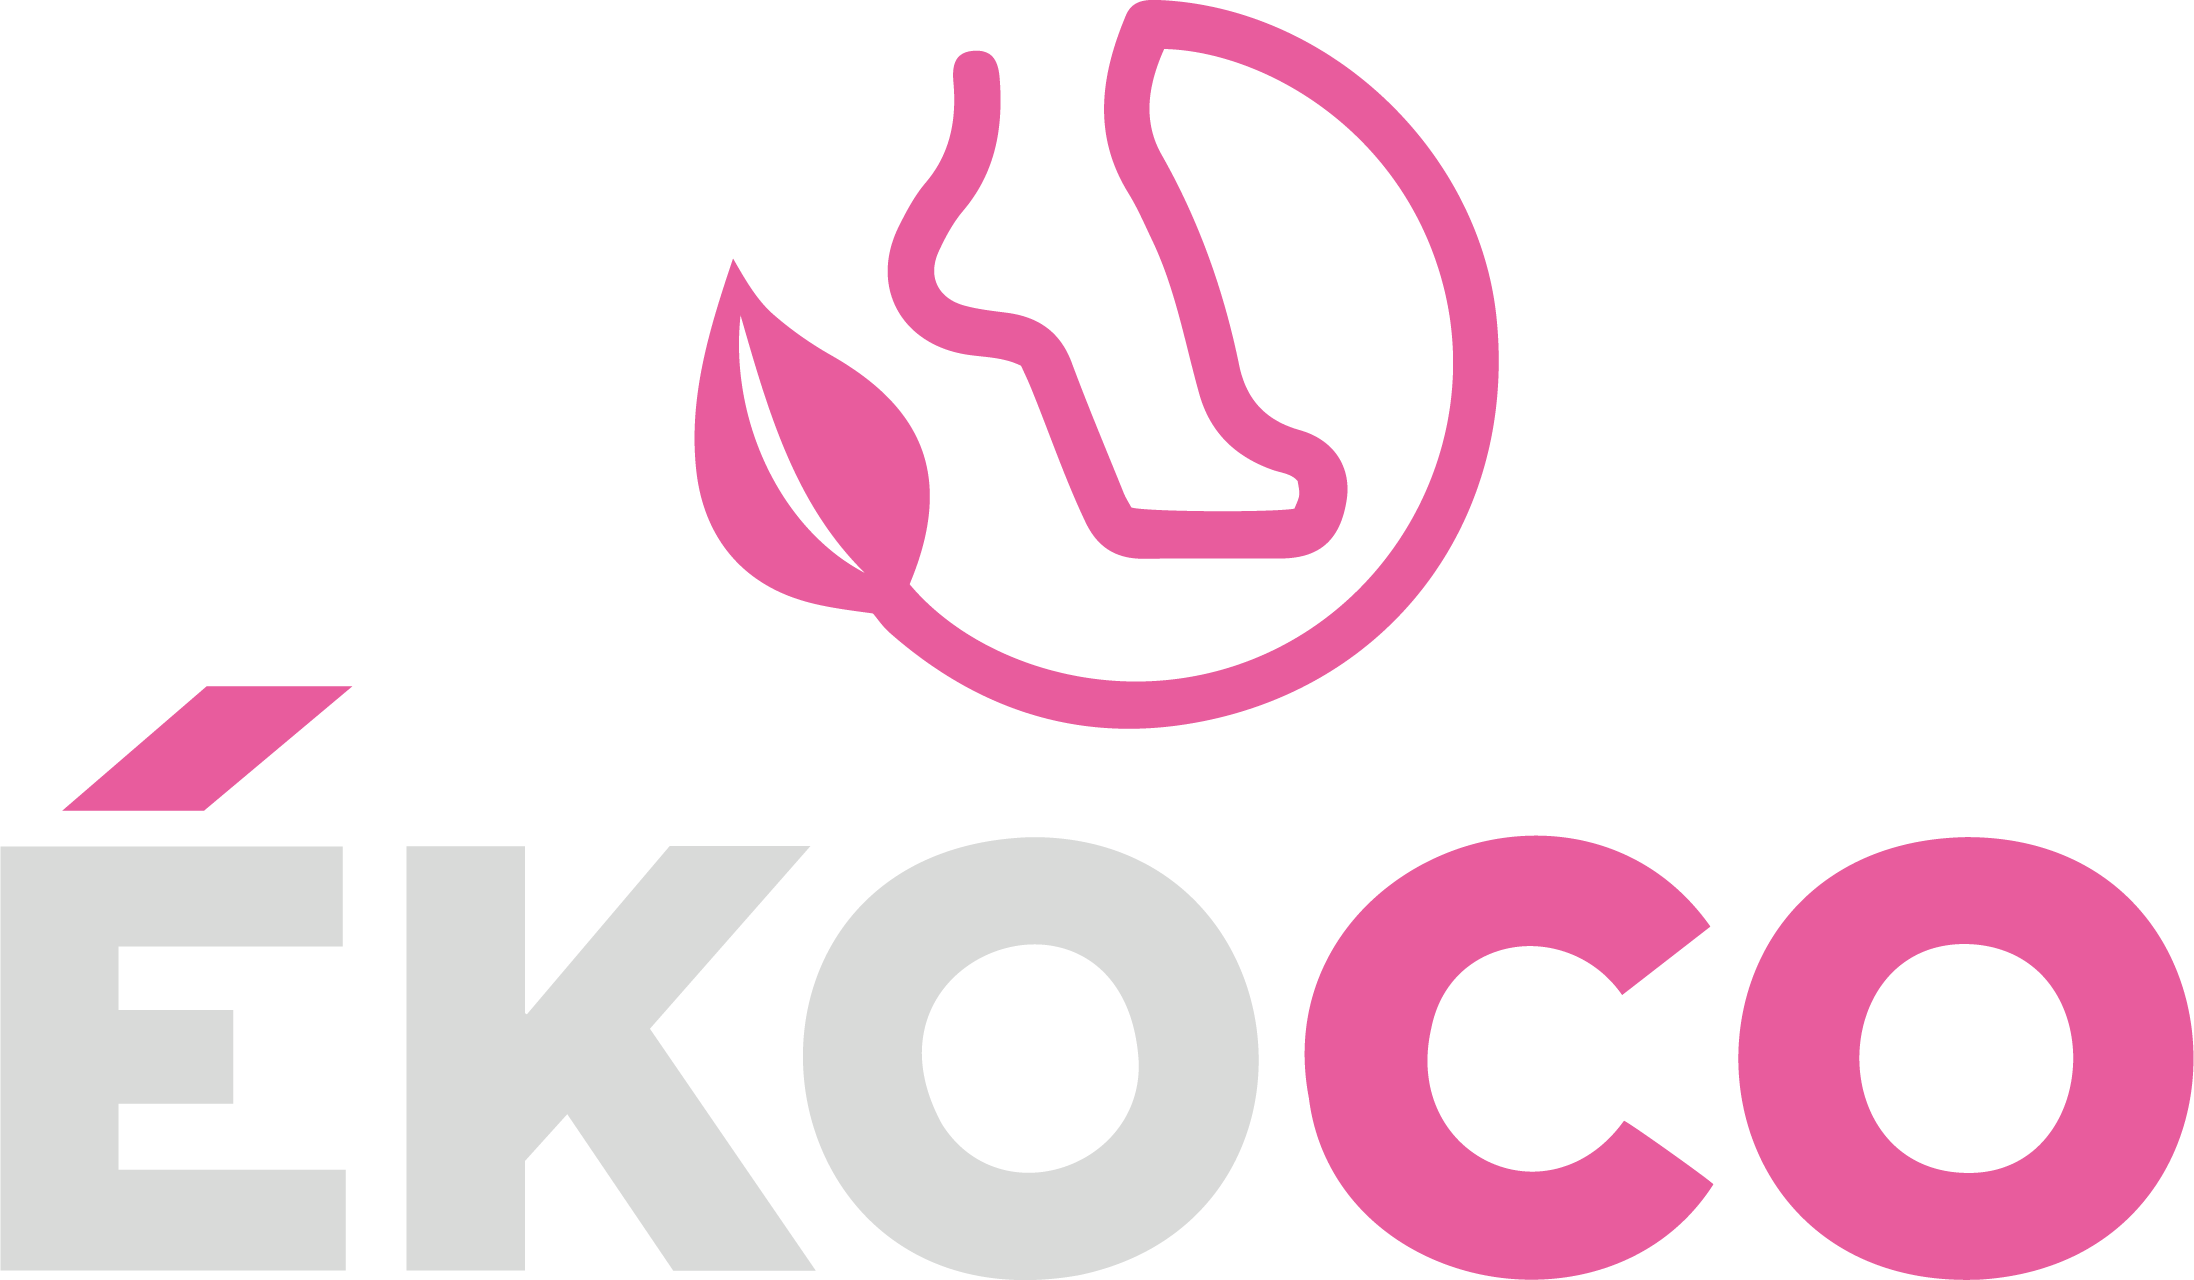 Logo Ekoco édition octobre rose